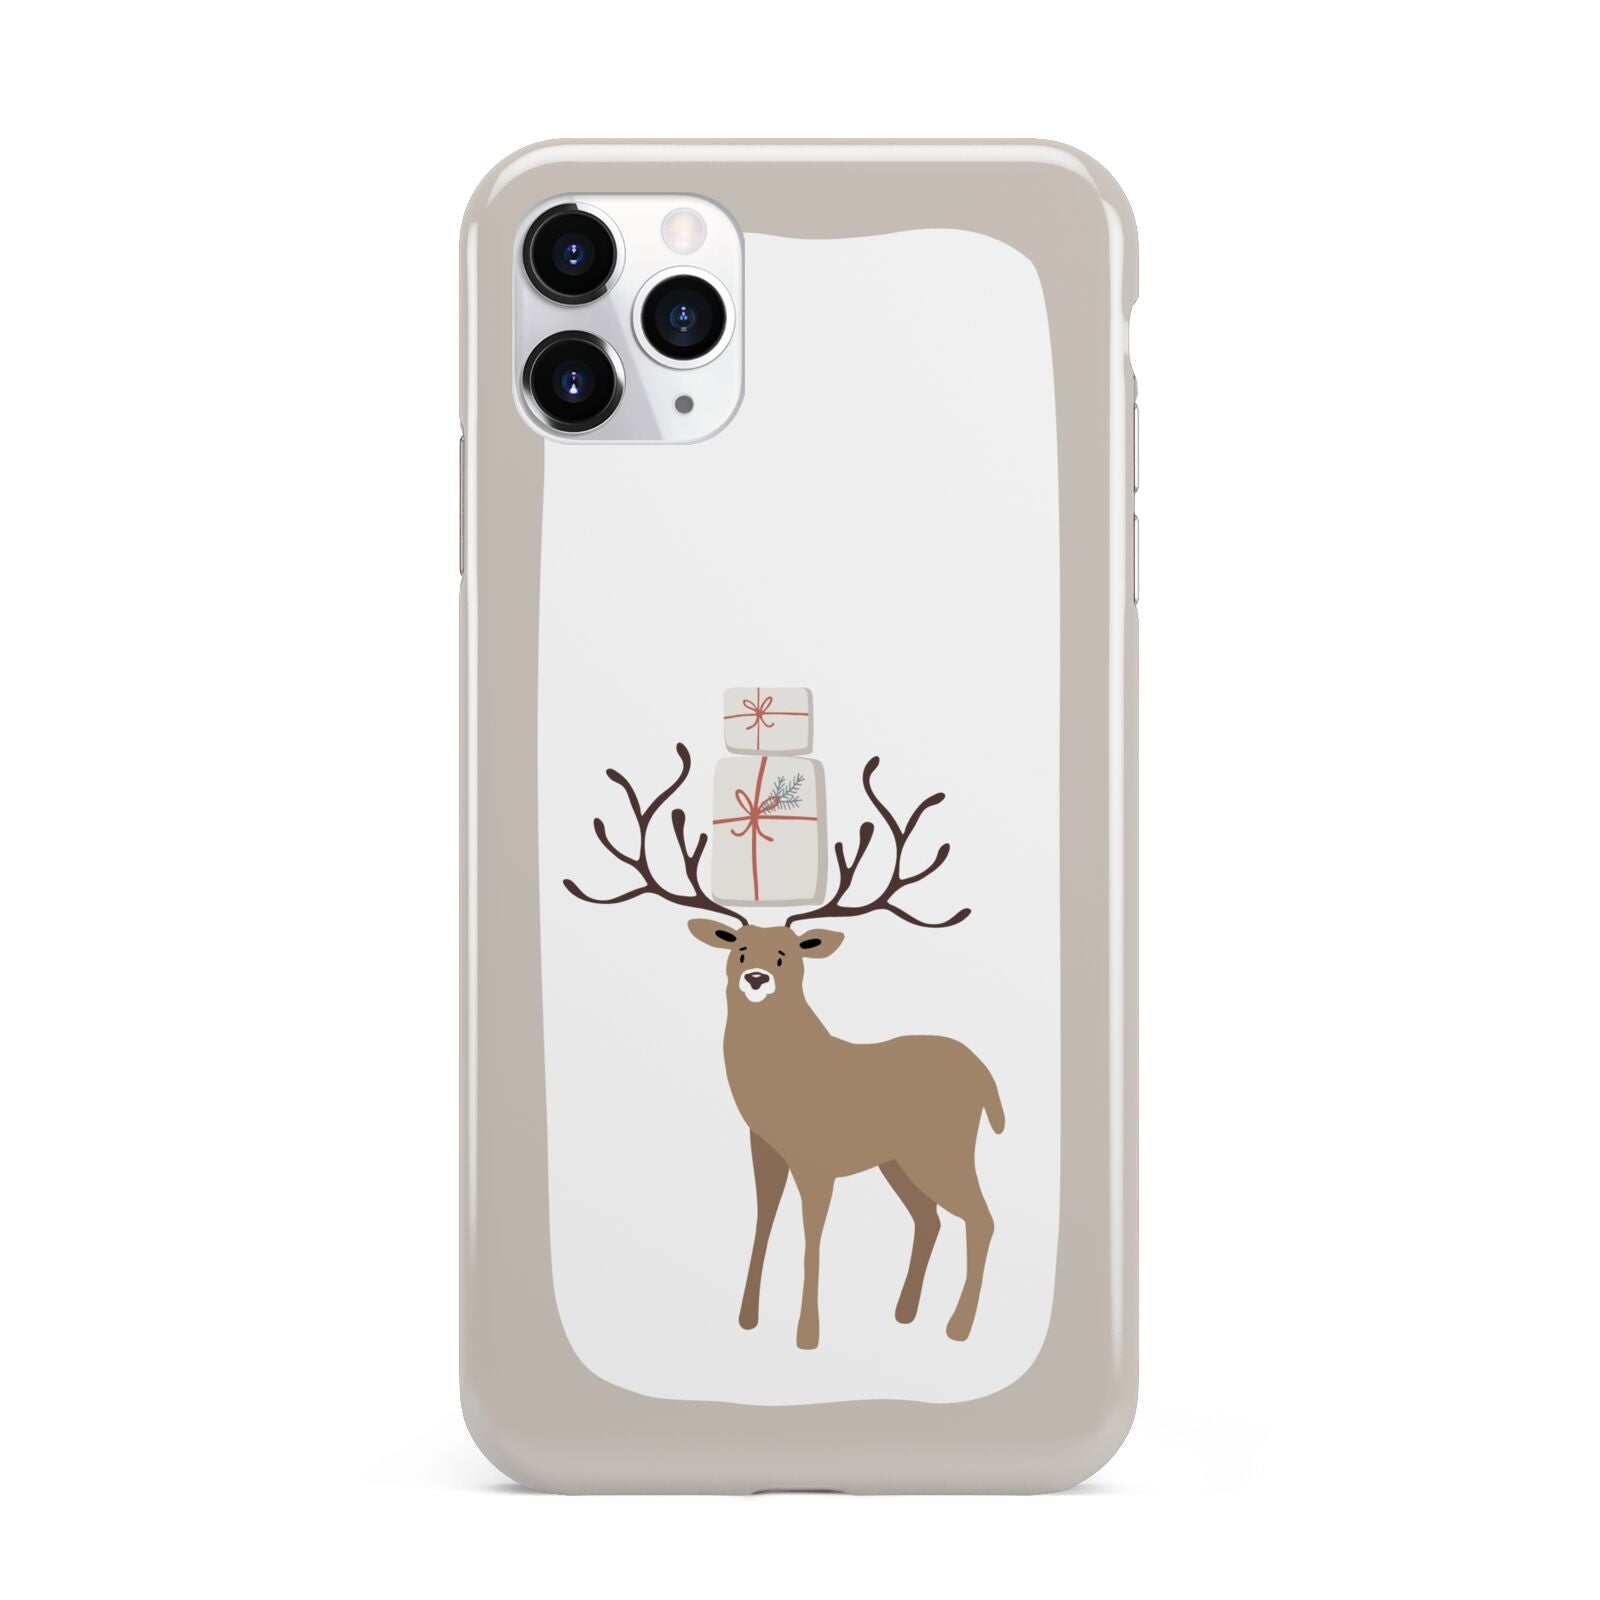 Reindeer Presents iPhone 11 Pro Max 3D Tough Case